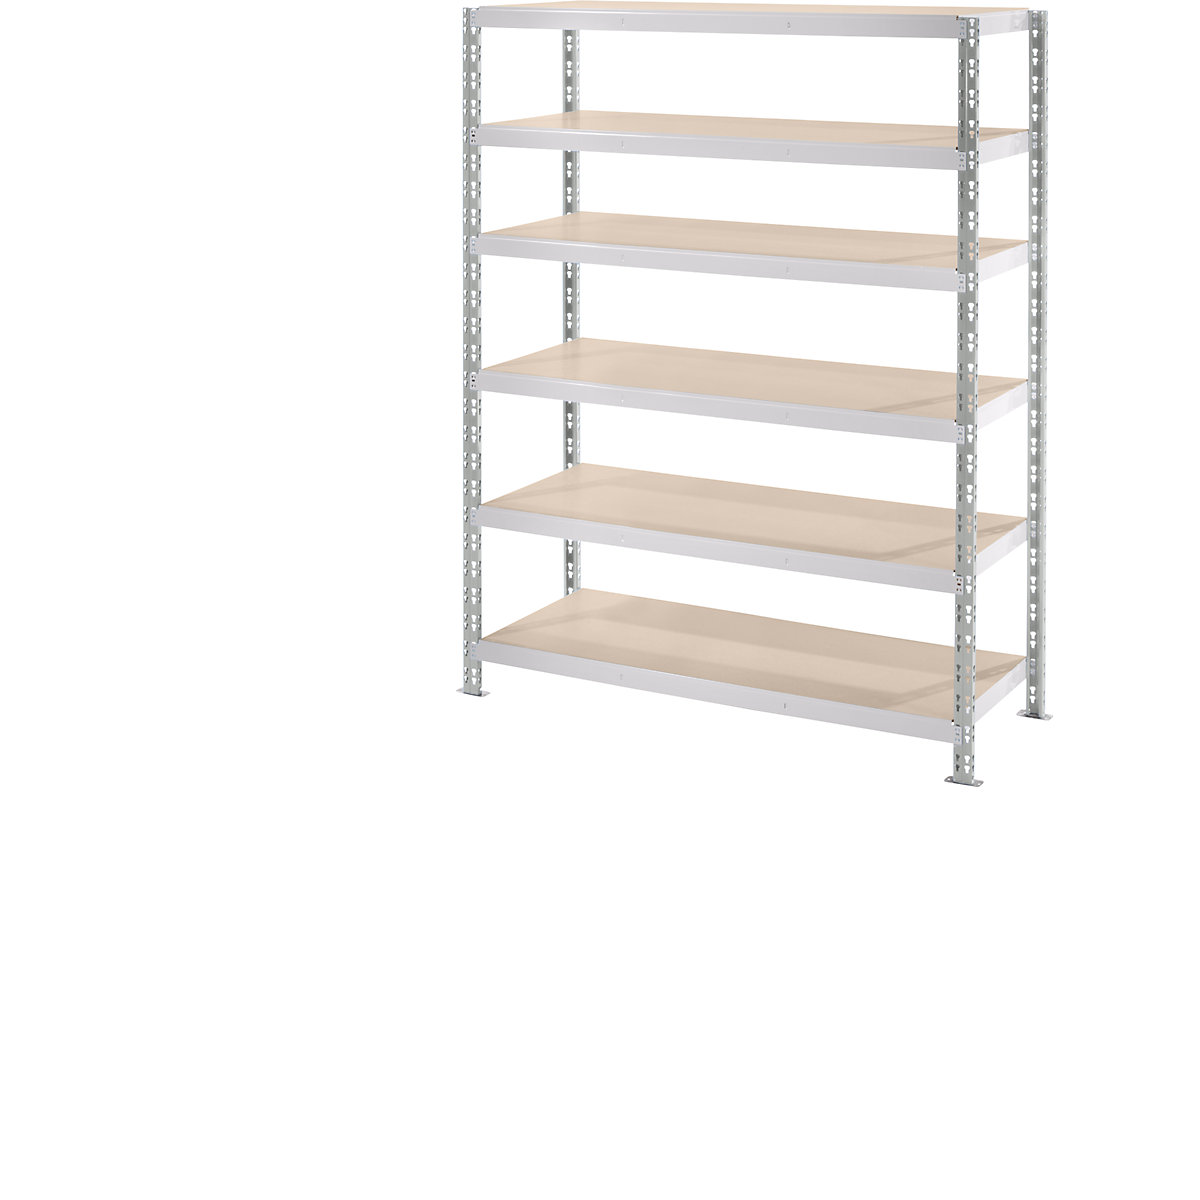 Wide span boltless shelf unit with moulded chipboard shelves, depth 600 mm, standard shelf unit, HxW 1976 x 1550 mm